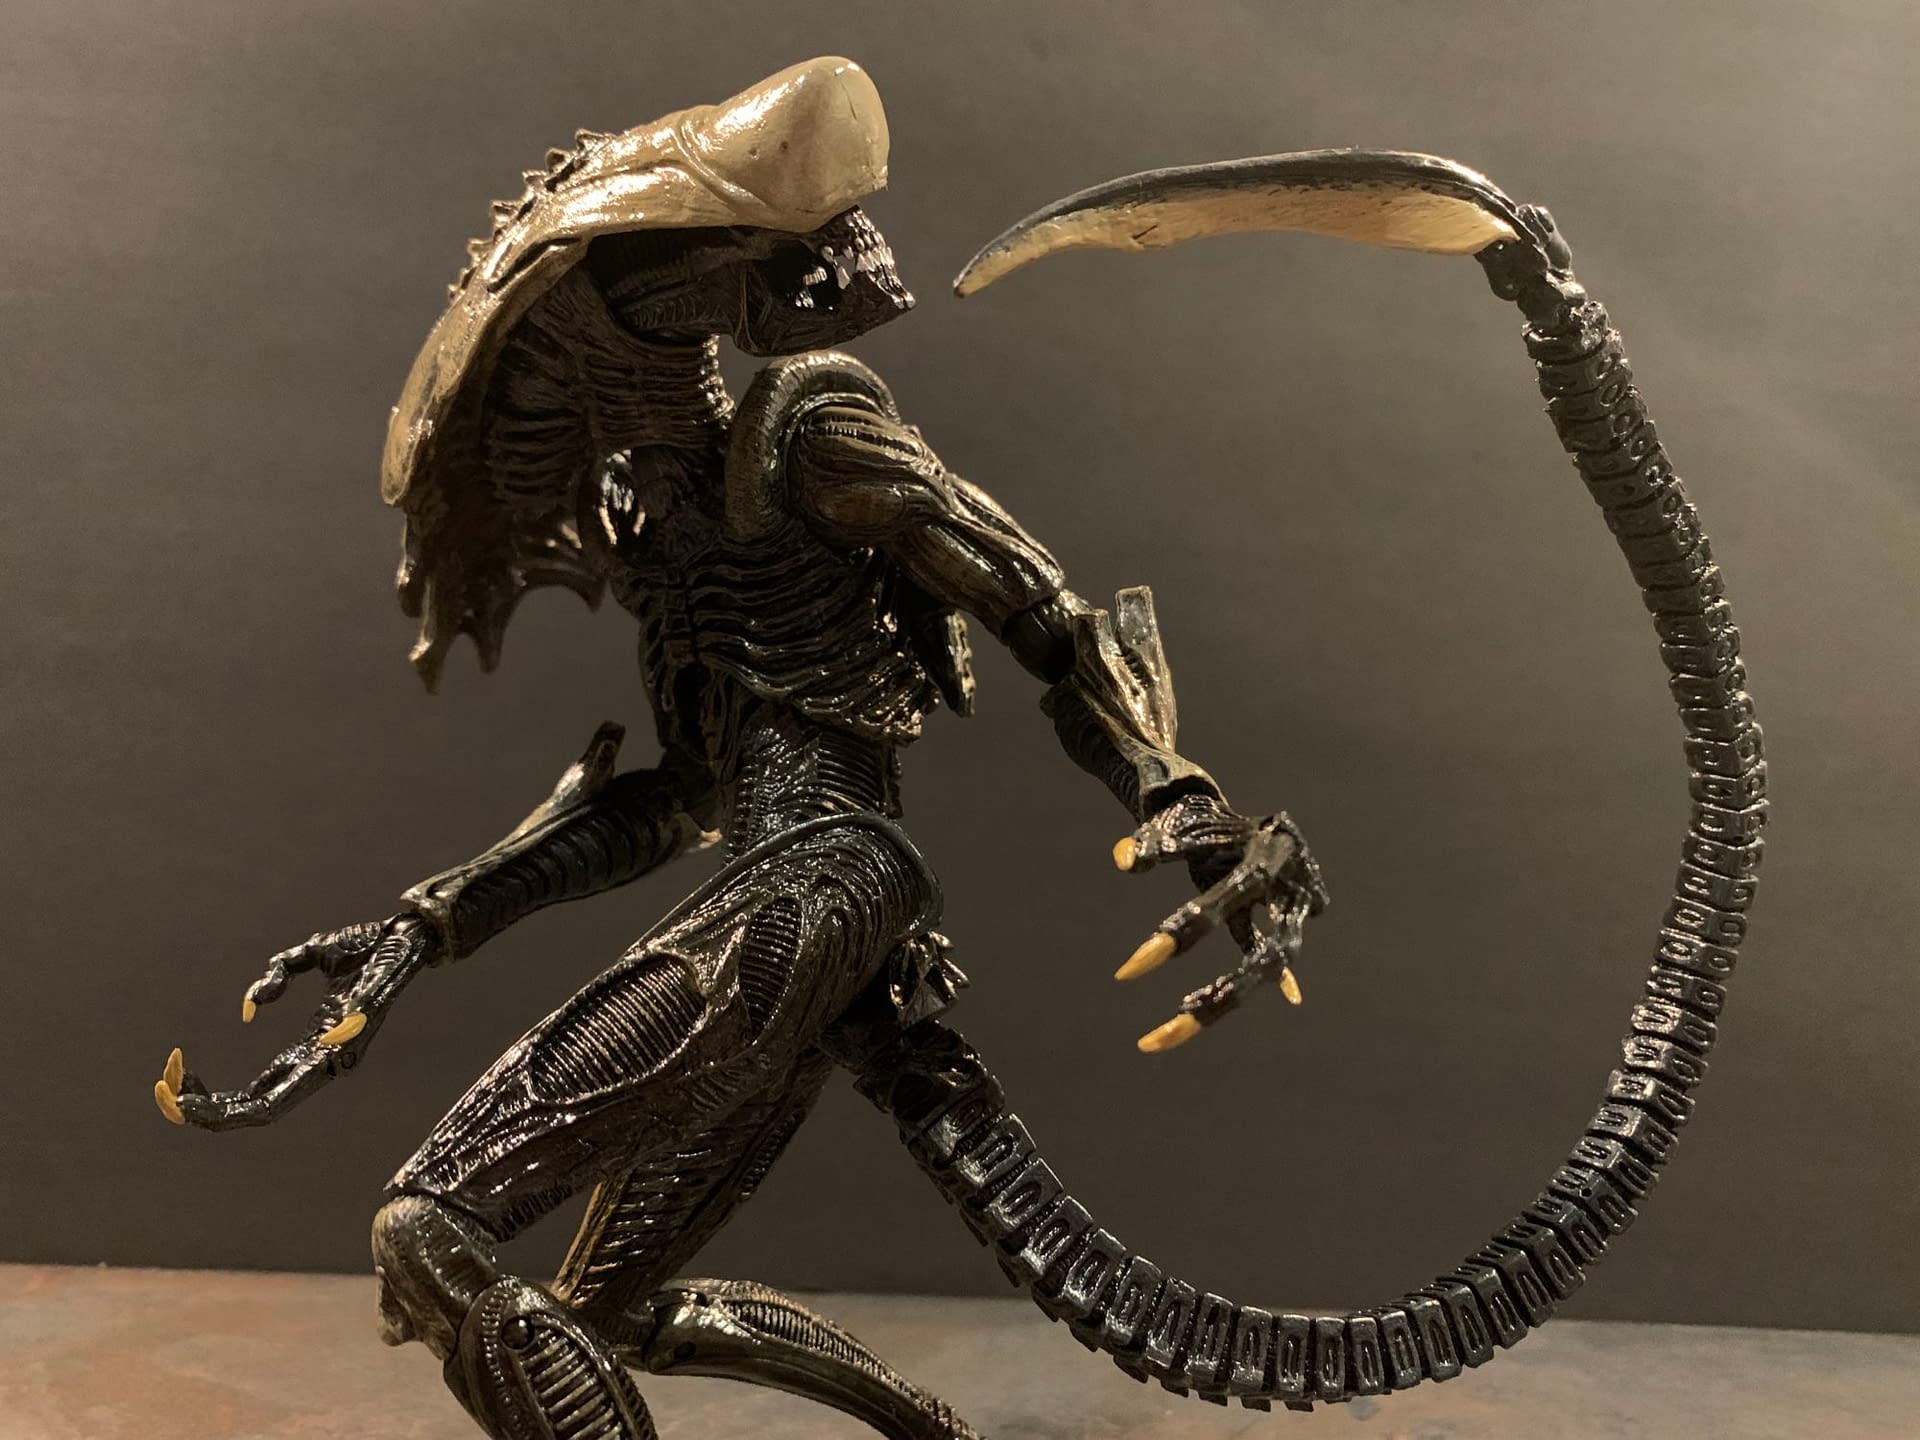 Hot Spot Collectibles and Toys - Alien vs Predator Game